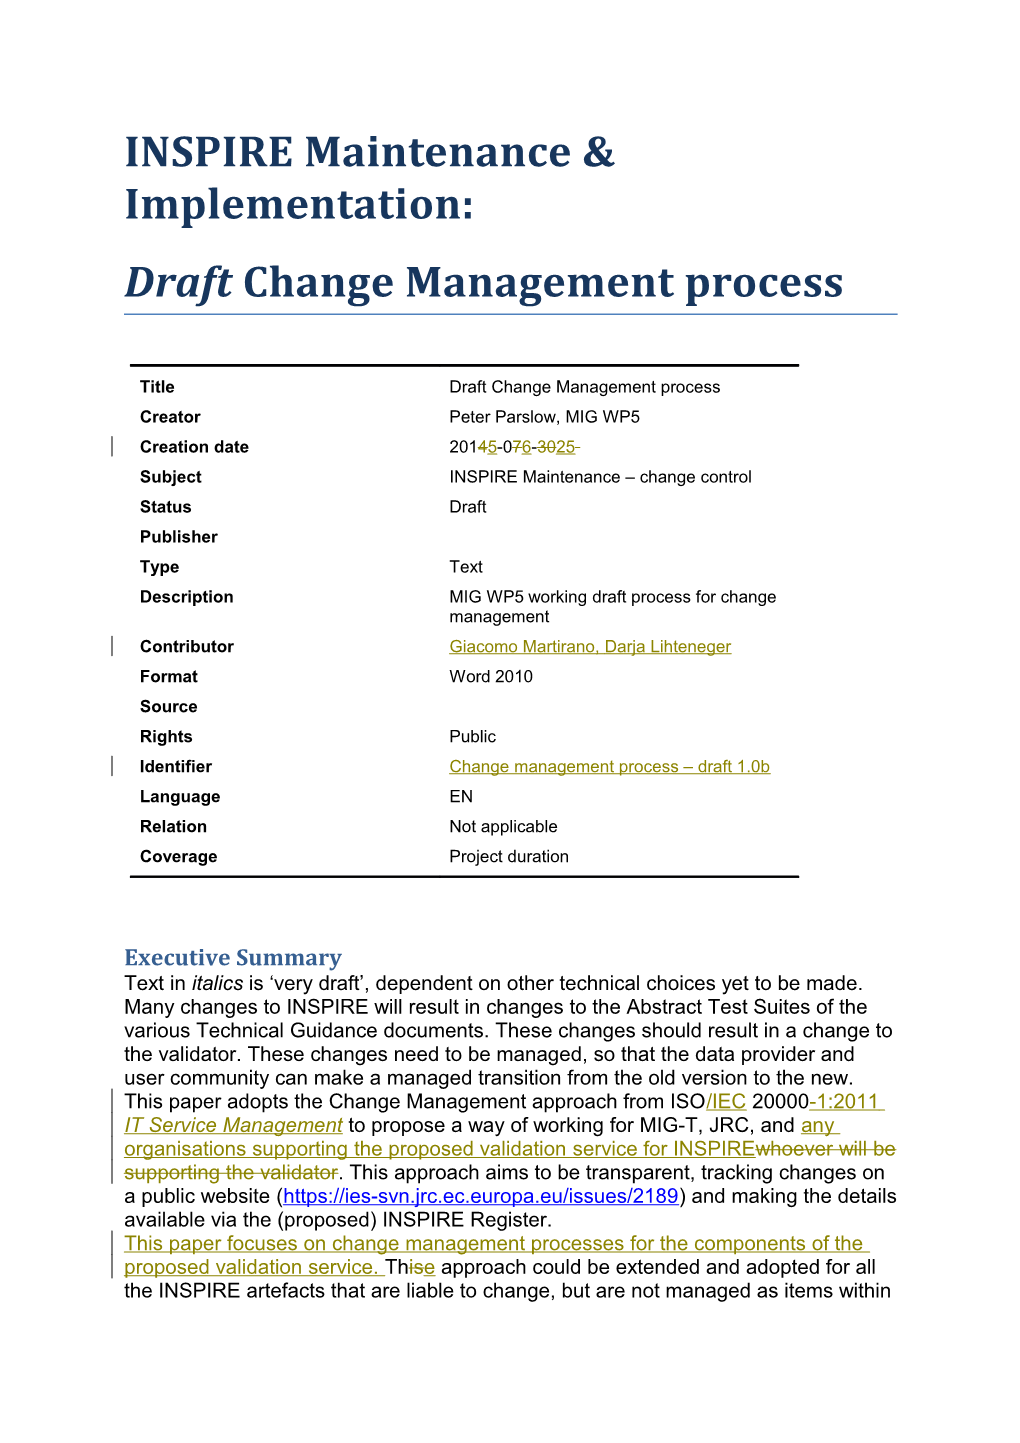 Draft Change Management Process